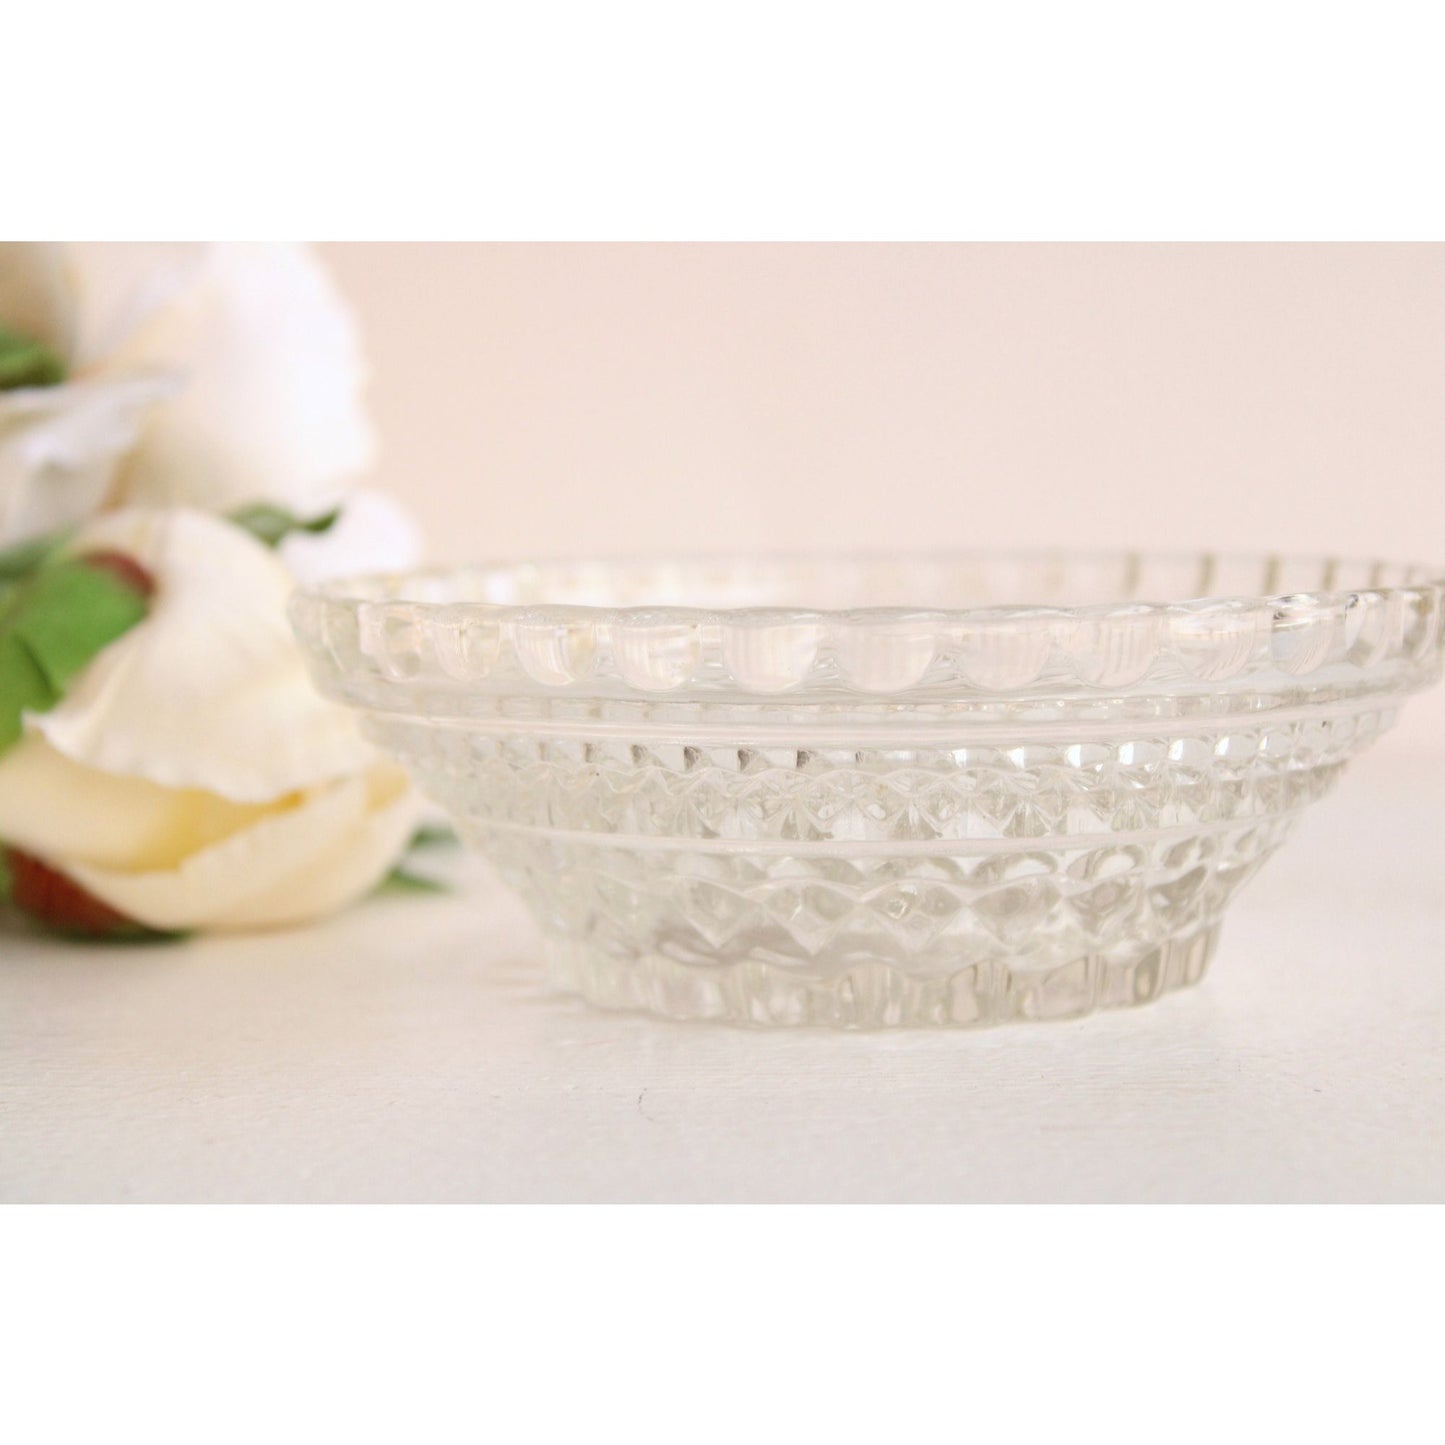 Vintage Cut Glass Bowl